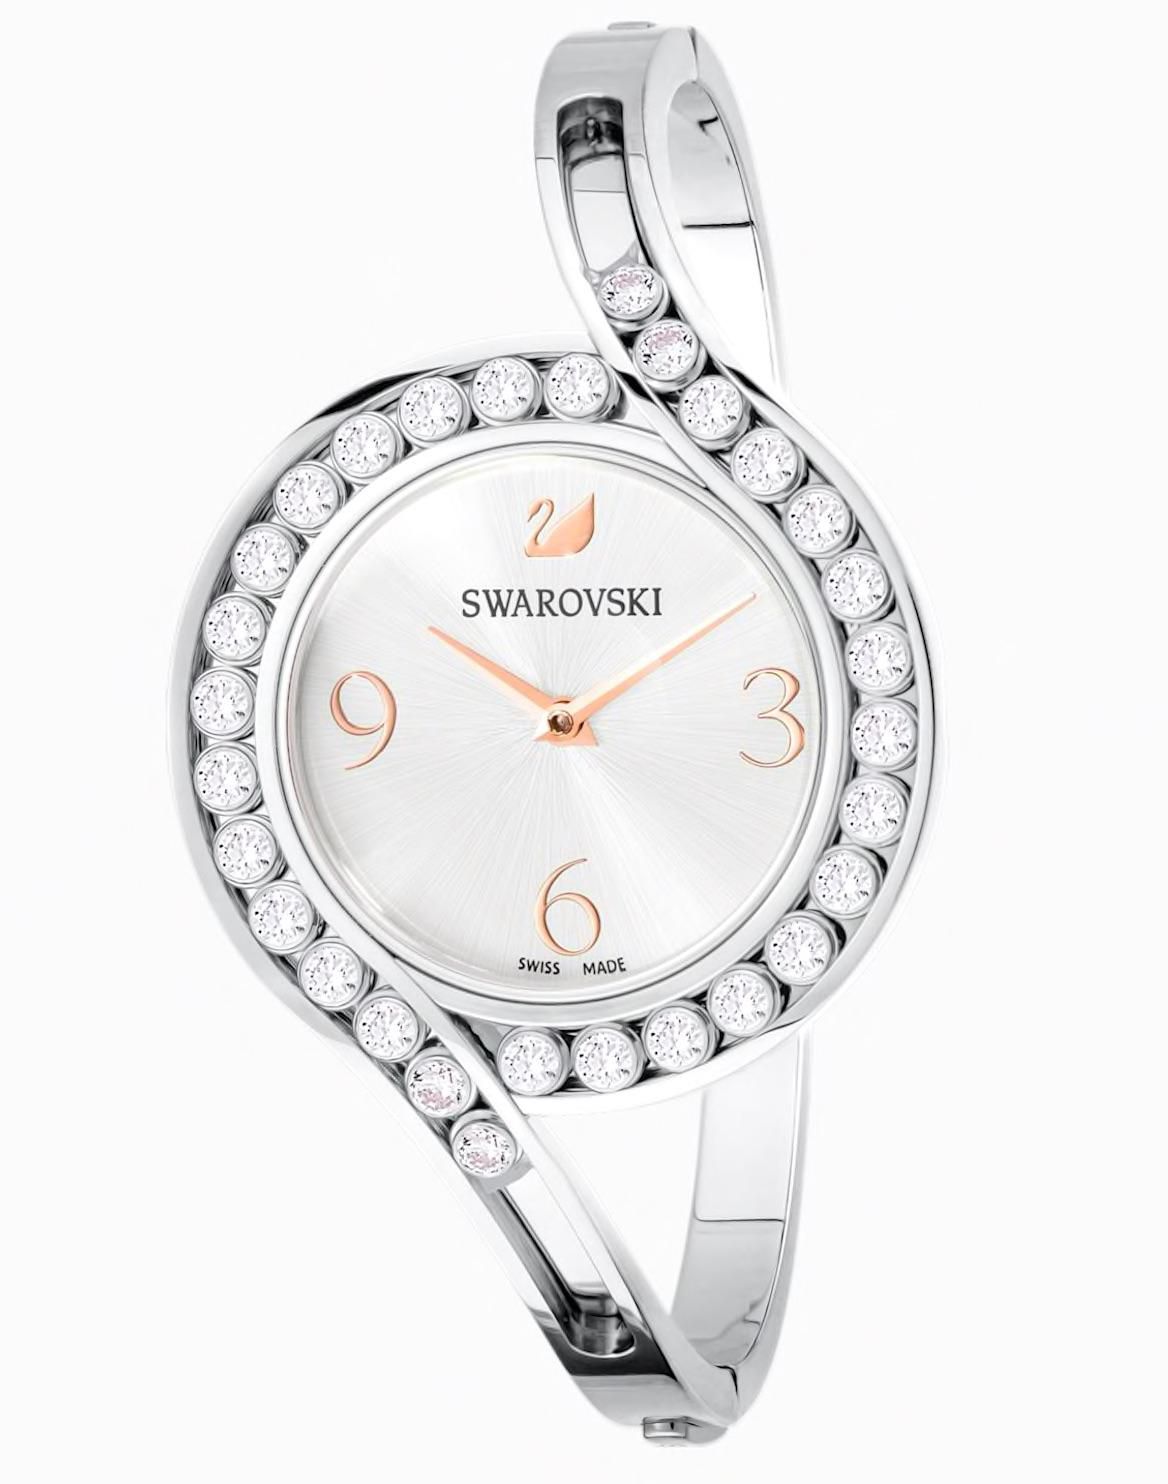 Swarovski Lovely Crystals Bangle Watch, Metal Bracelet, Stainless Steel, White